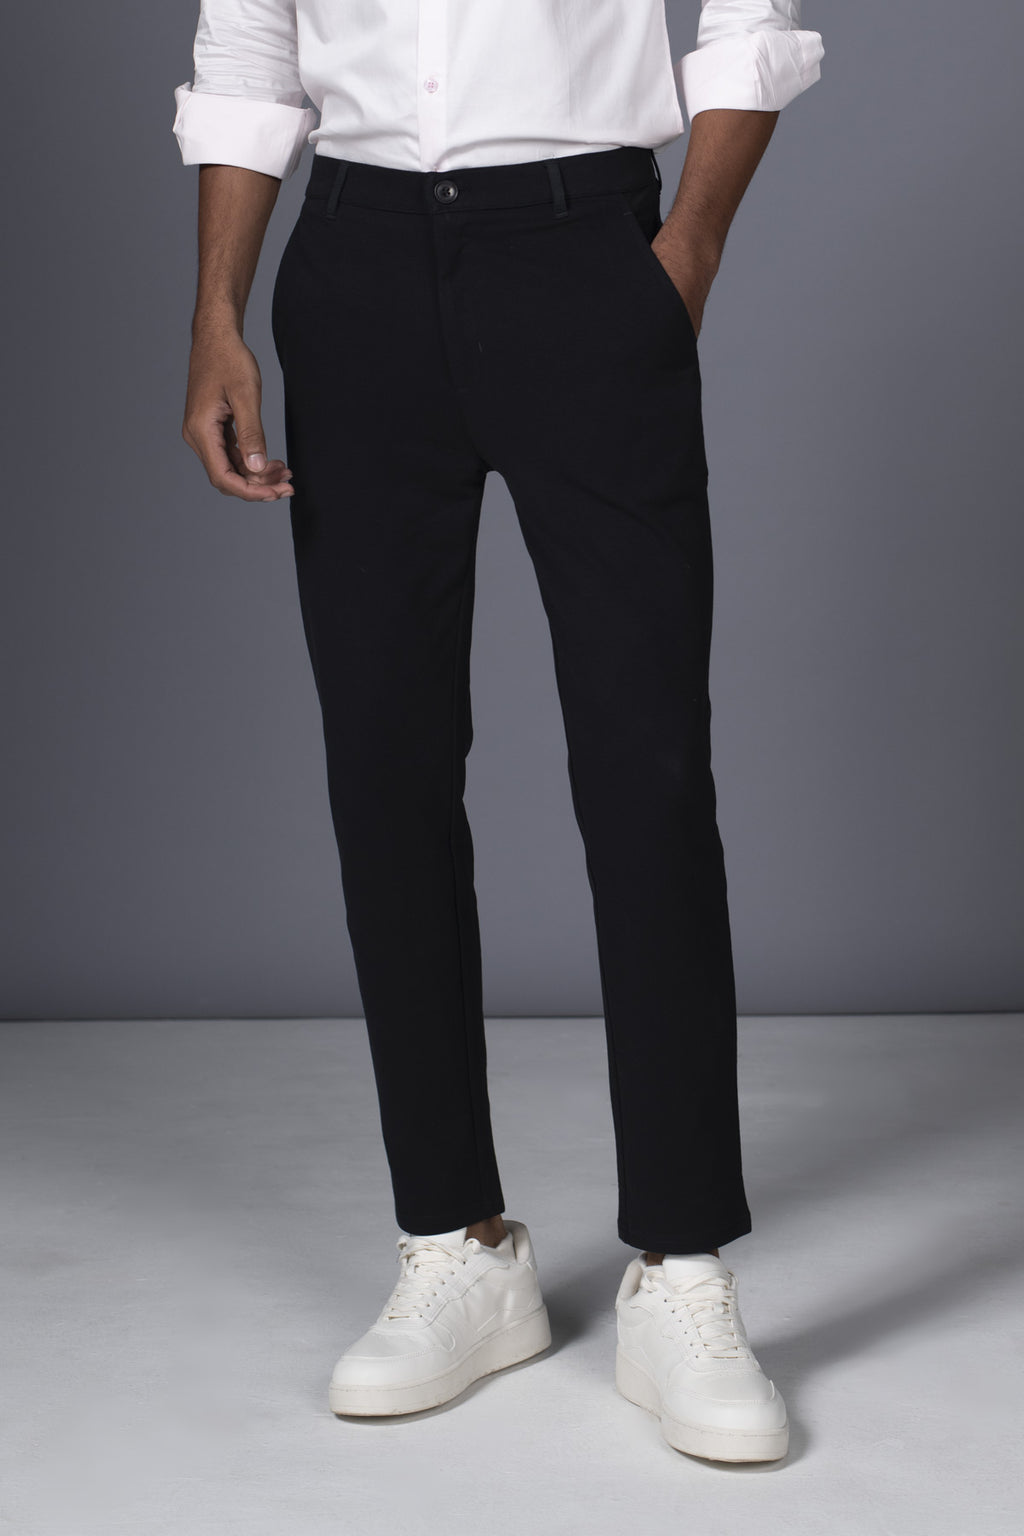 Top Brass Dark Grey SlimFit Formal Trousers 6560026 993